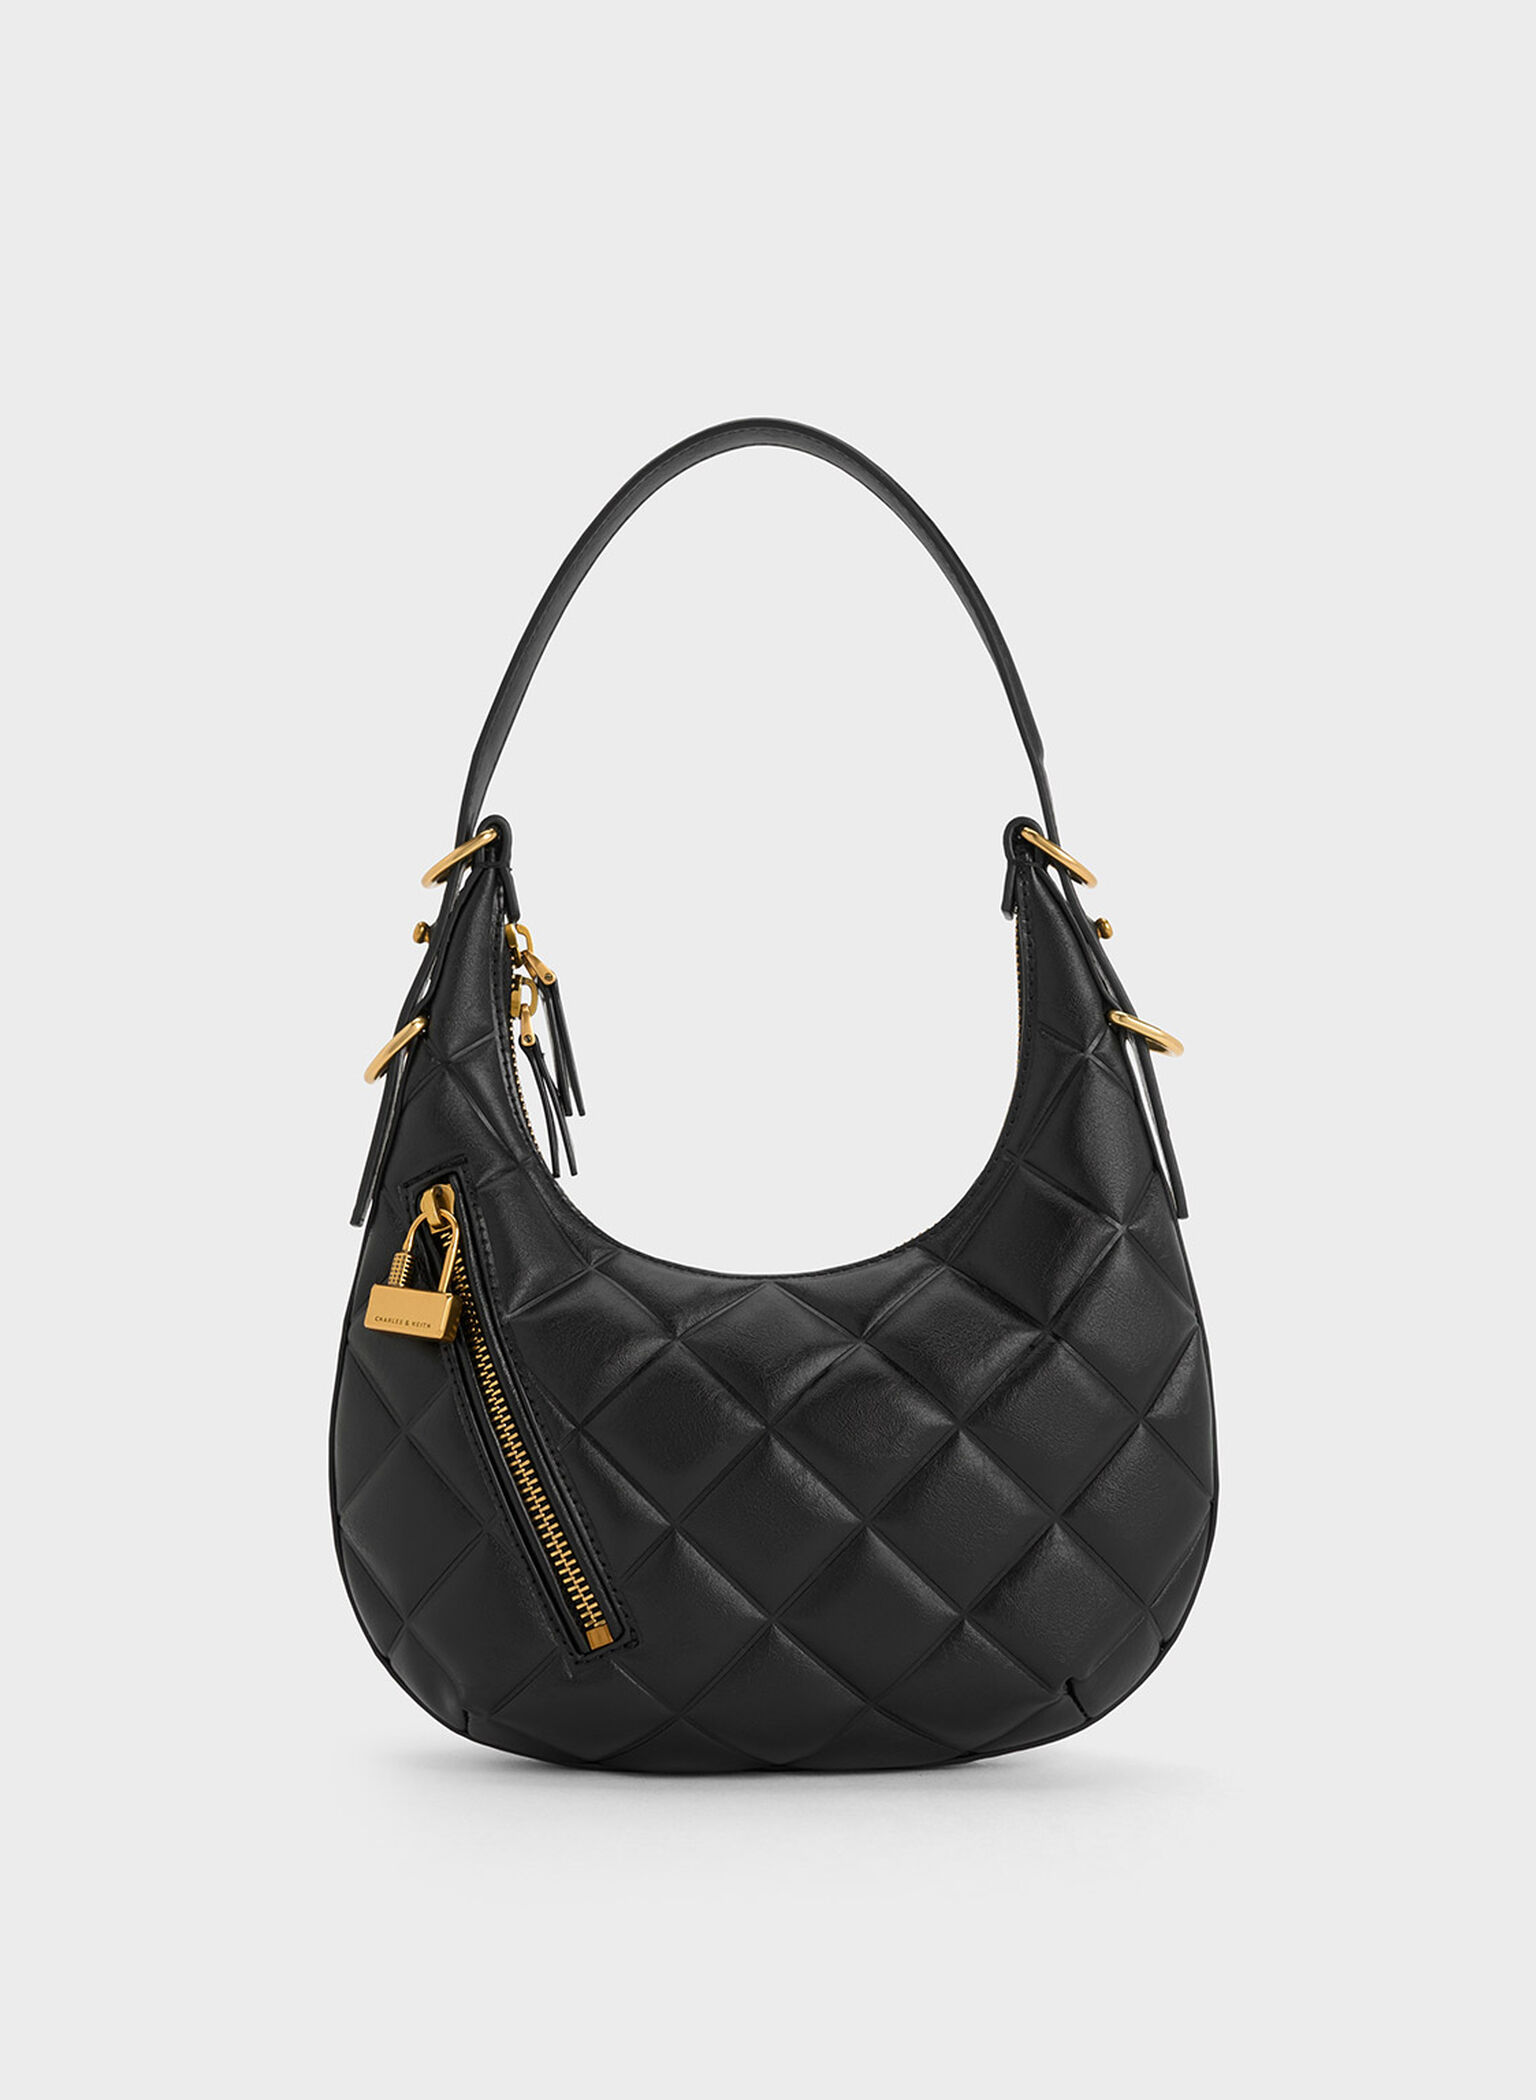 Michael Kors Soho Small Quilted Leather Shoulder Bag - Black